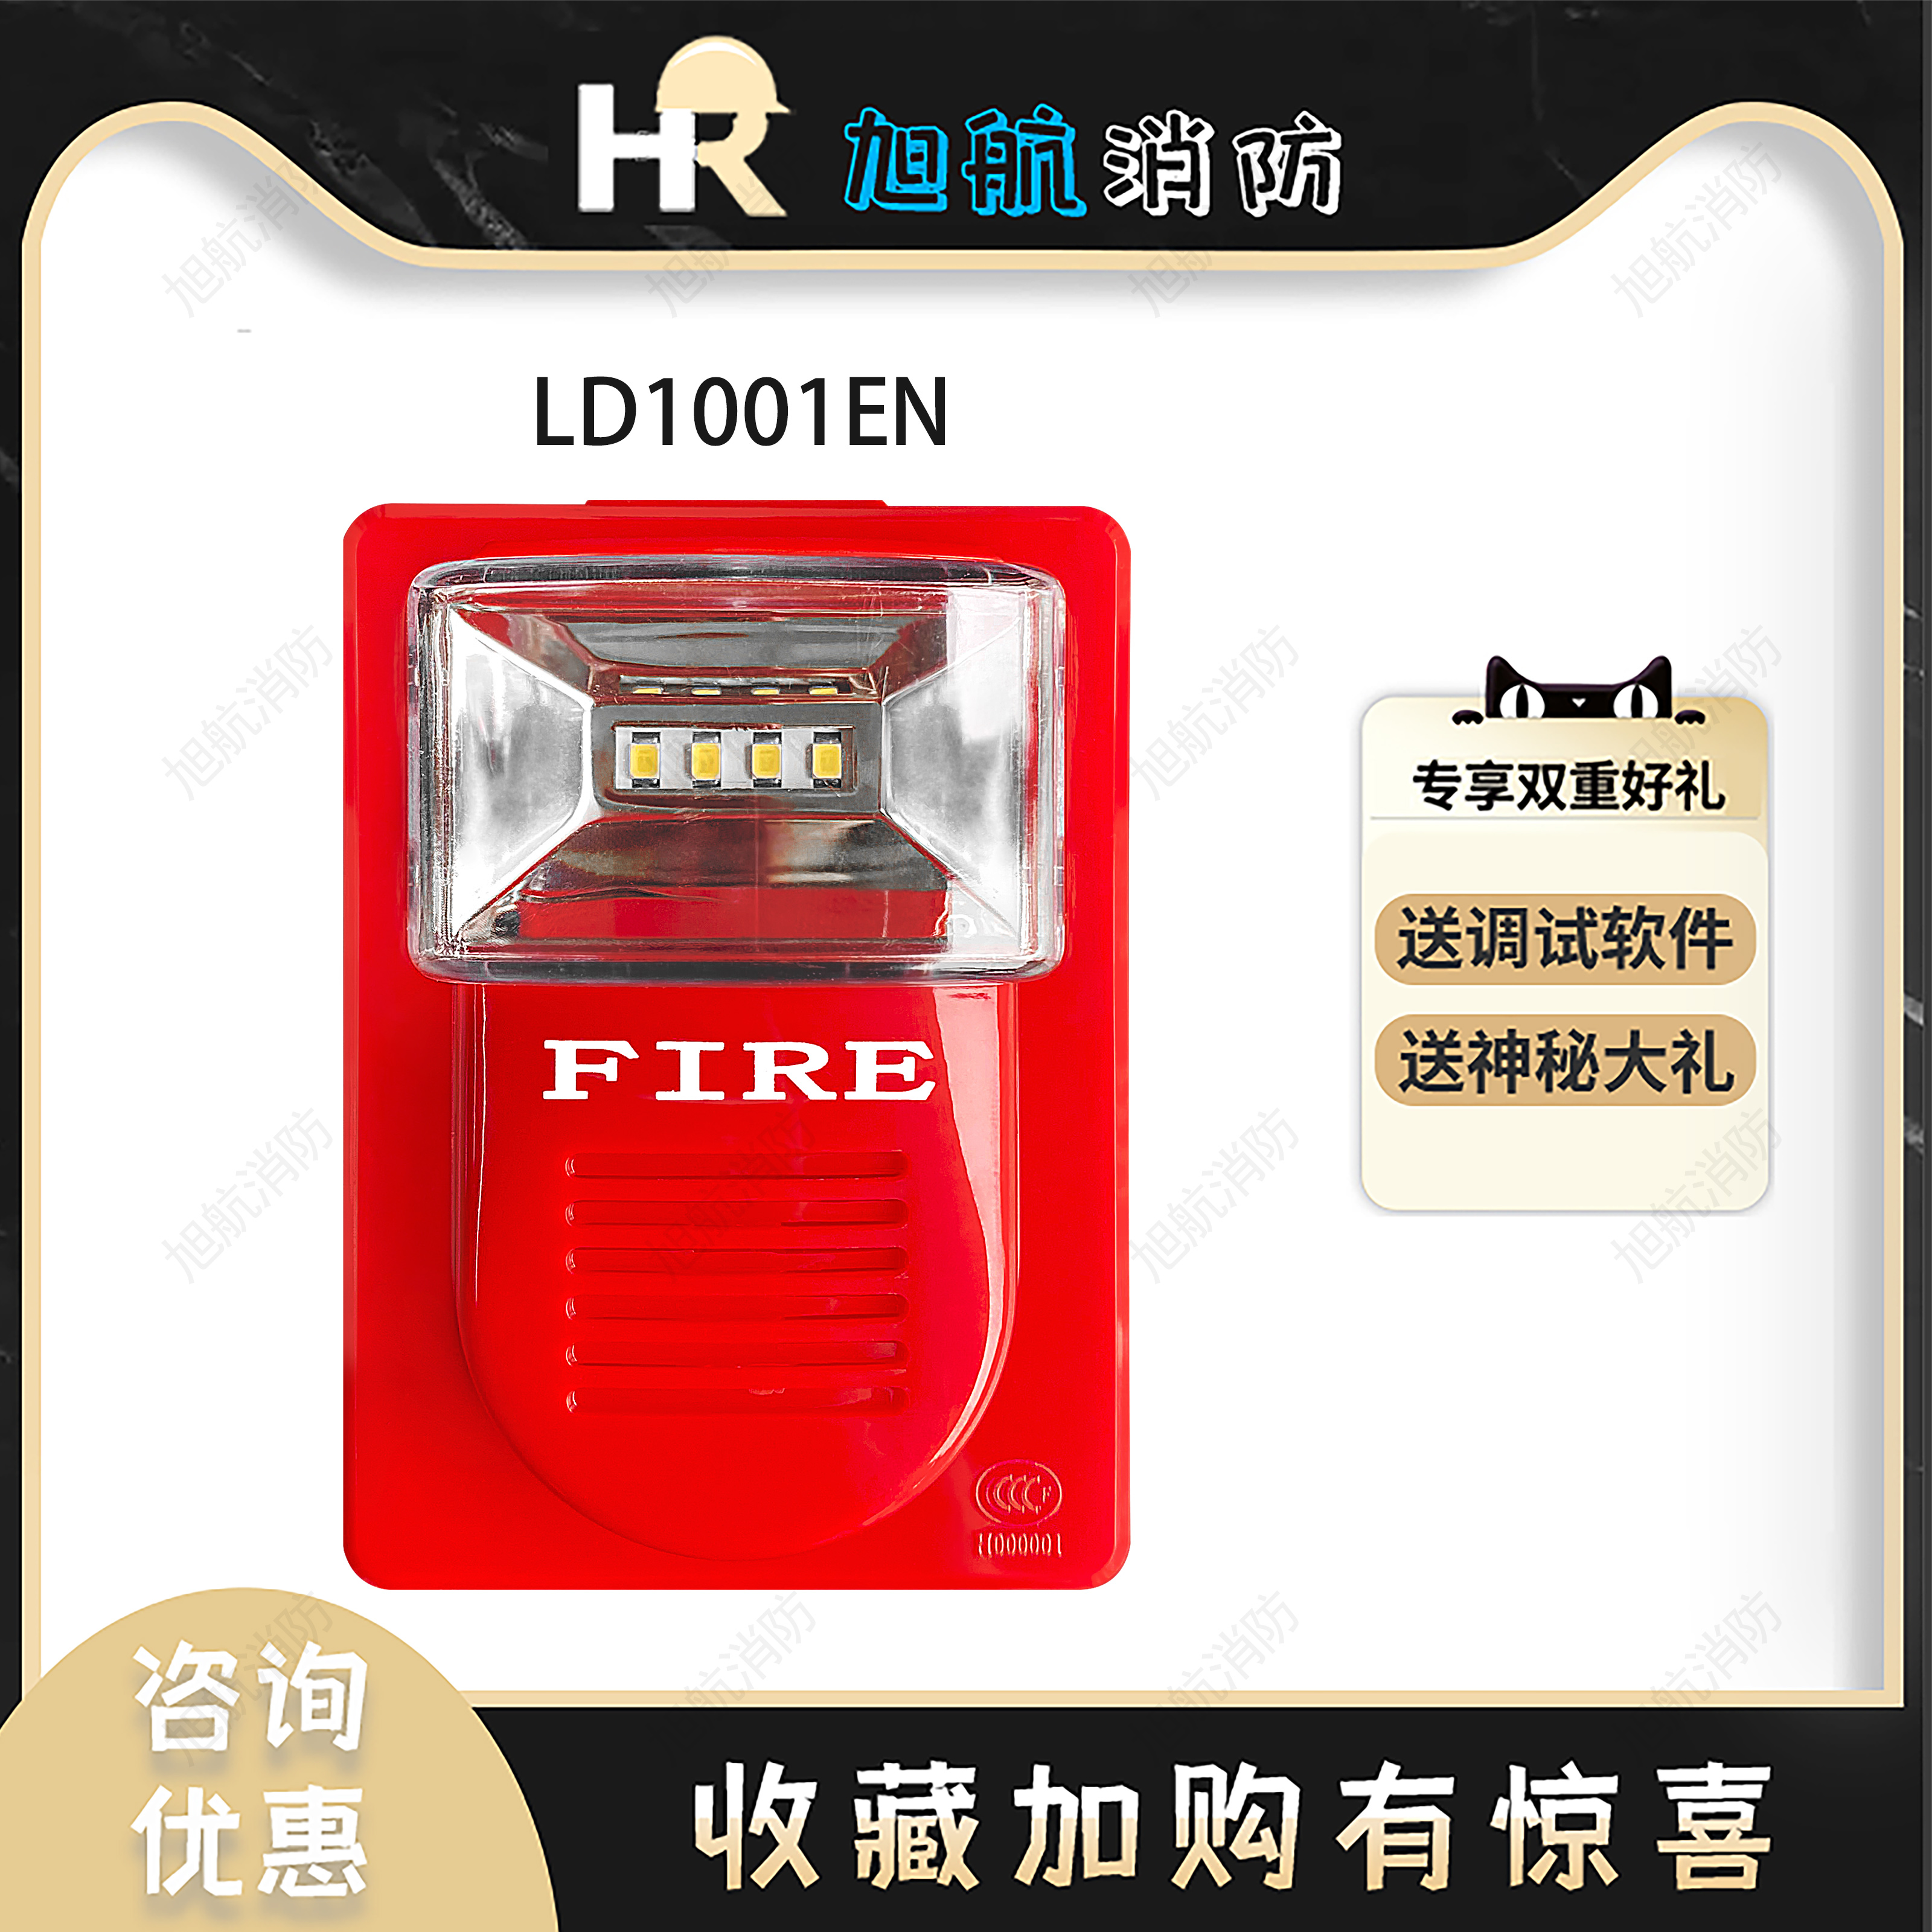 Beijing Lida Huaxin fire audible and visual alarm LD1001EN Coding-type news louder